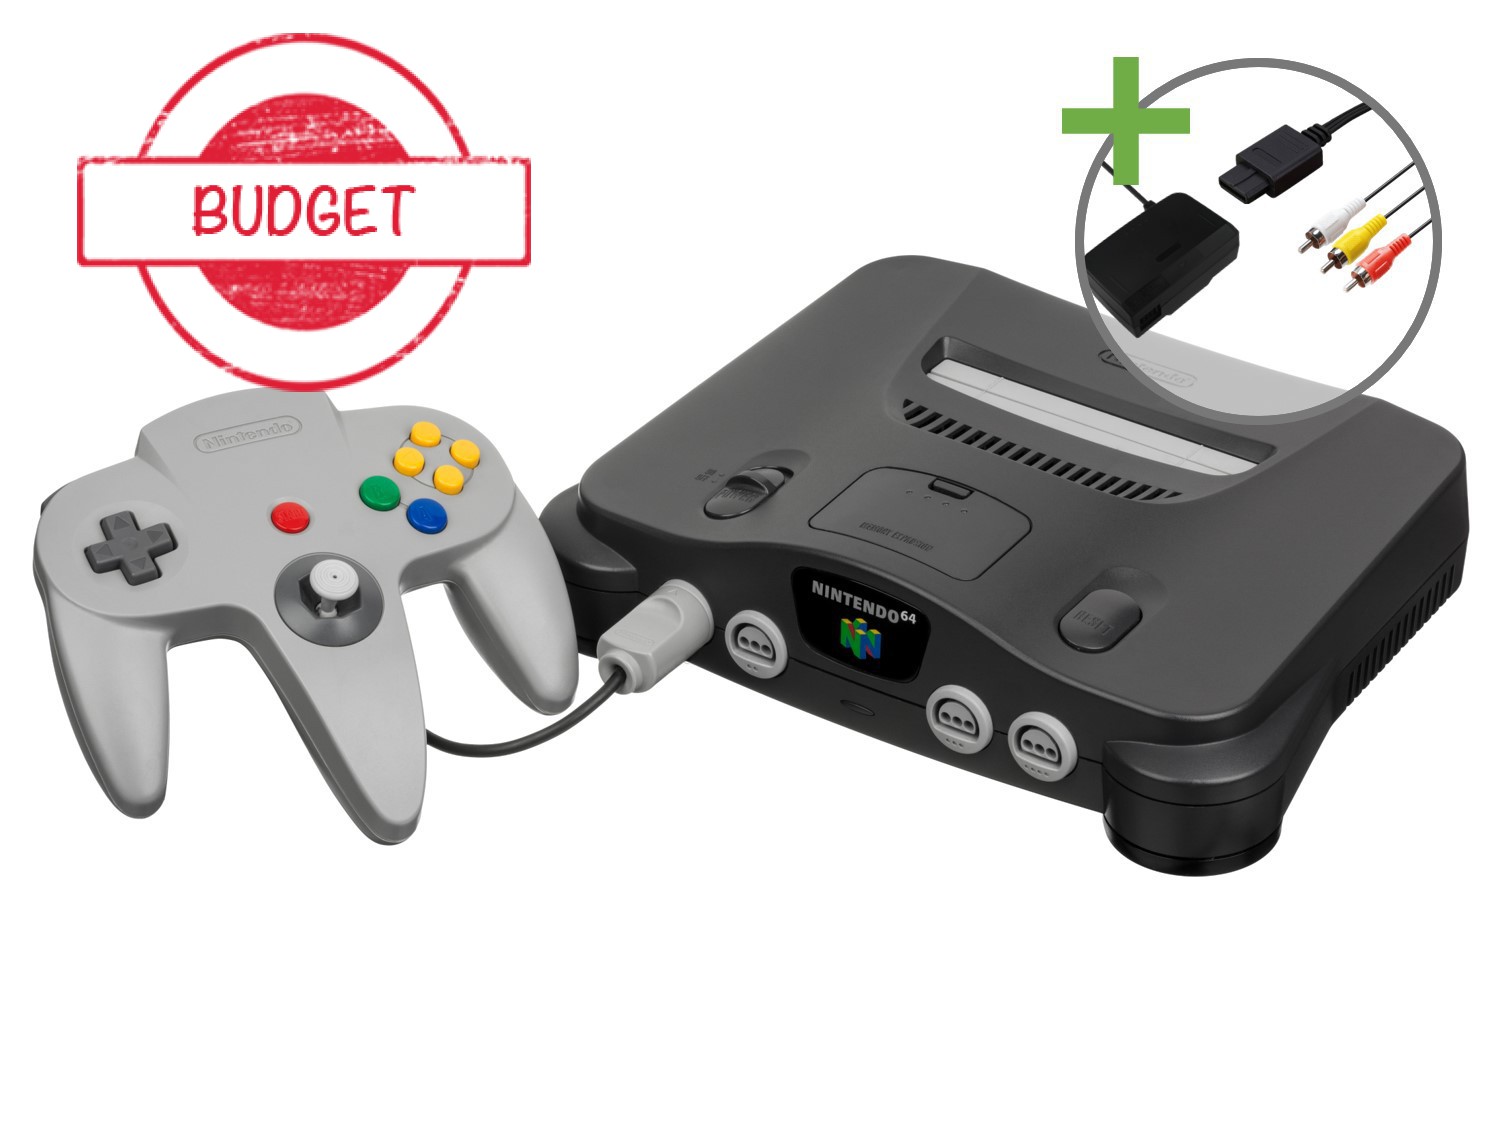 Nintendo 64 Starter Pack - Super Mario 64 Edition - Budget - Nintendo 64 Hardware - 2